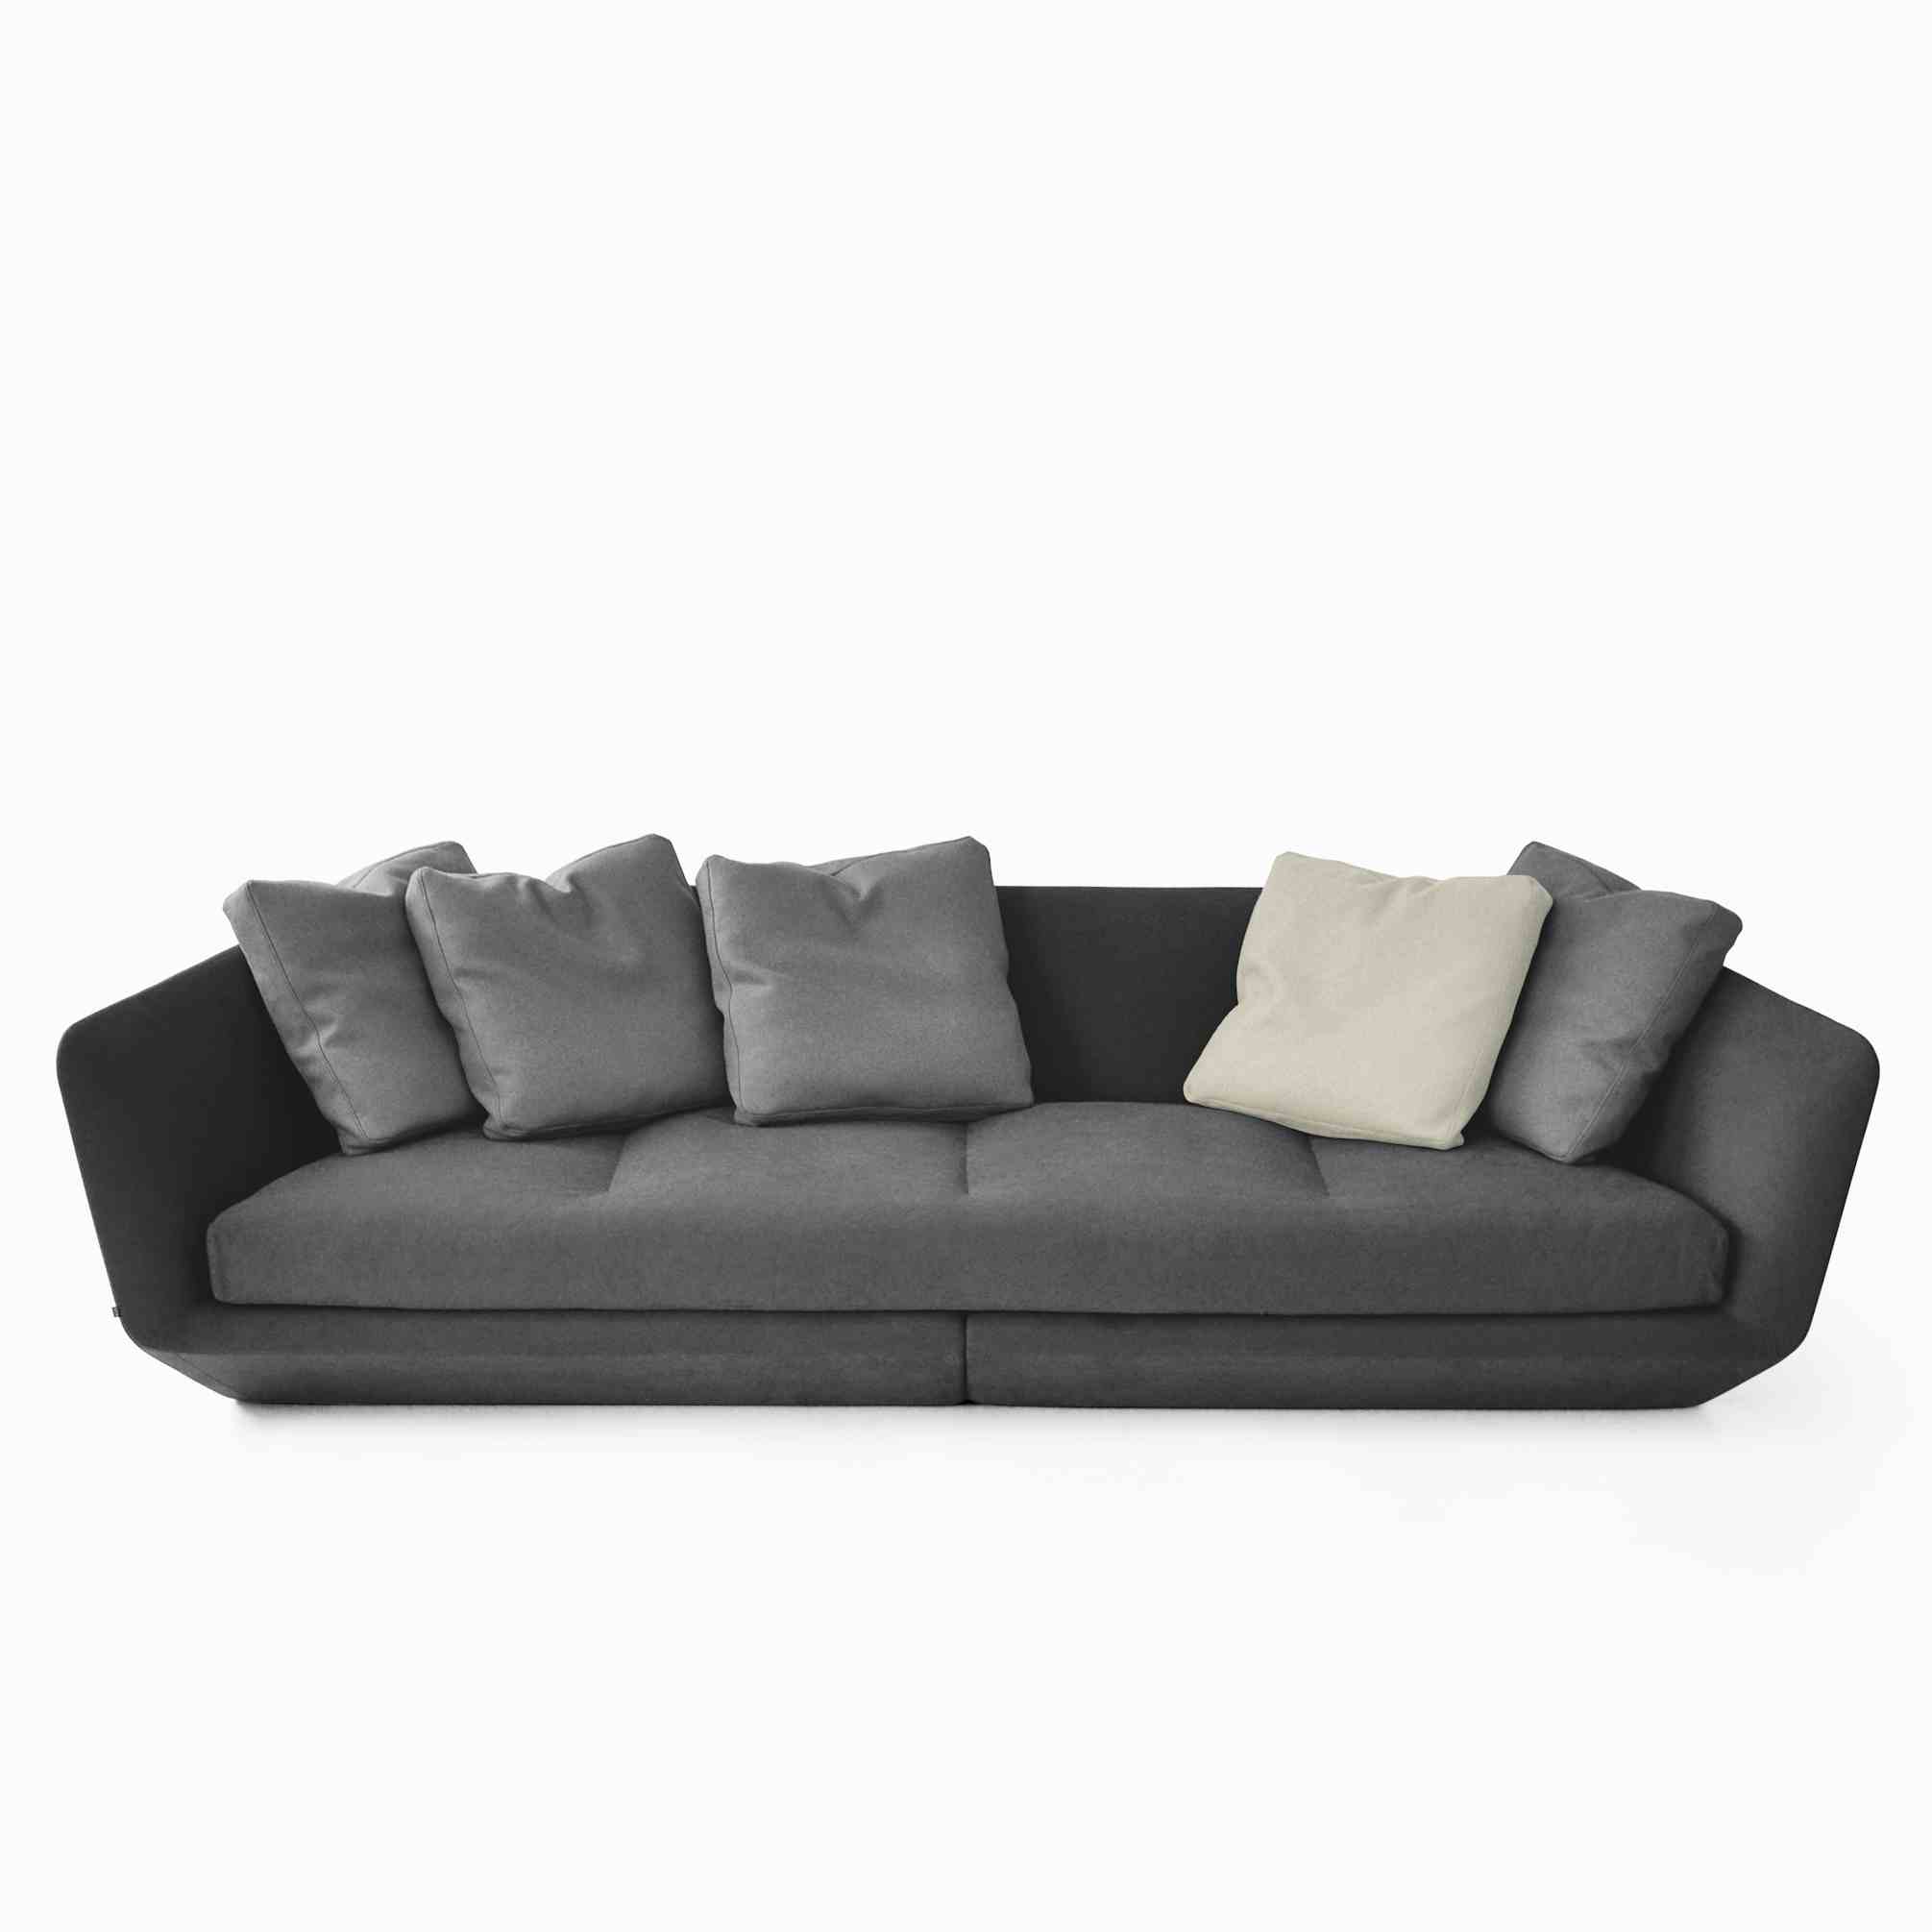 Bensen furniture aura sofa thumbnail haute living